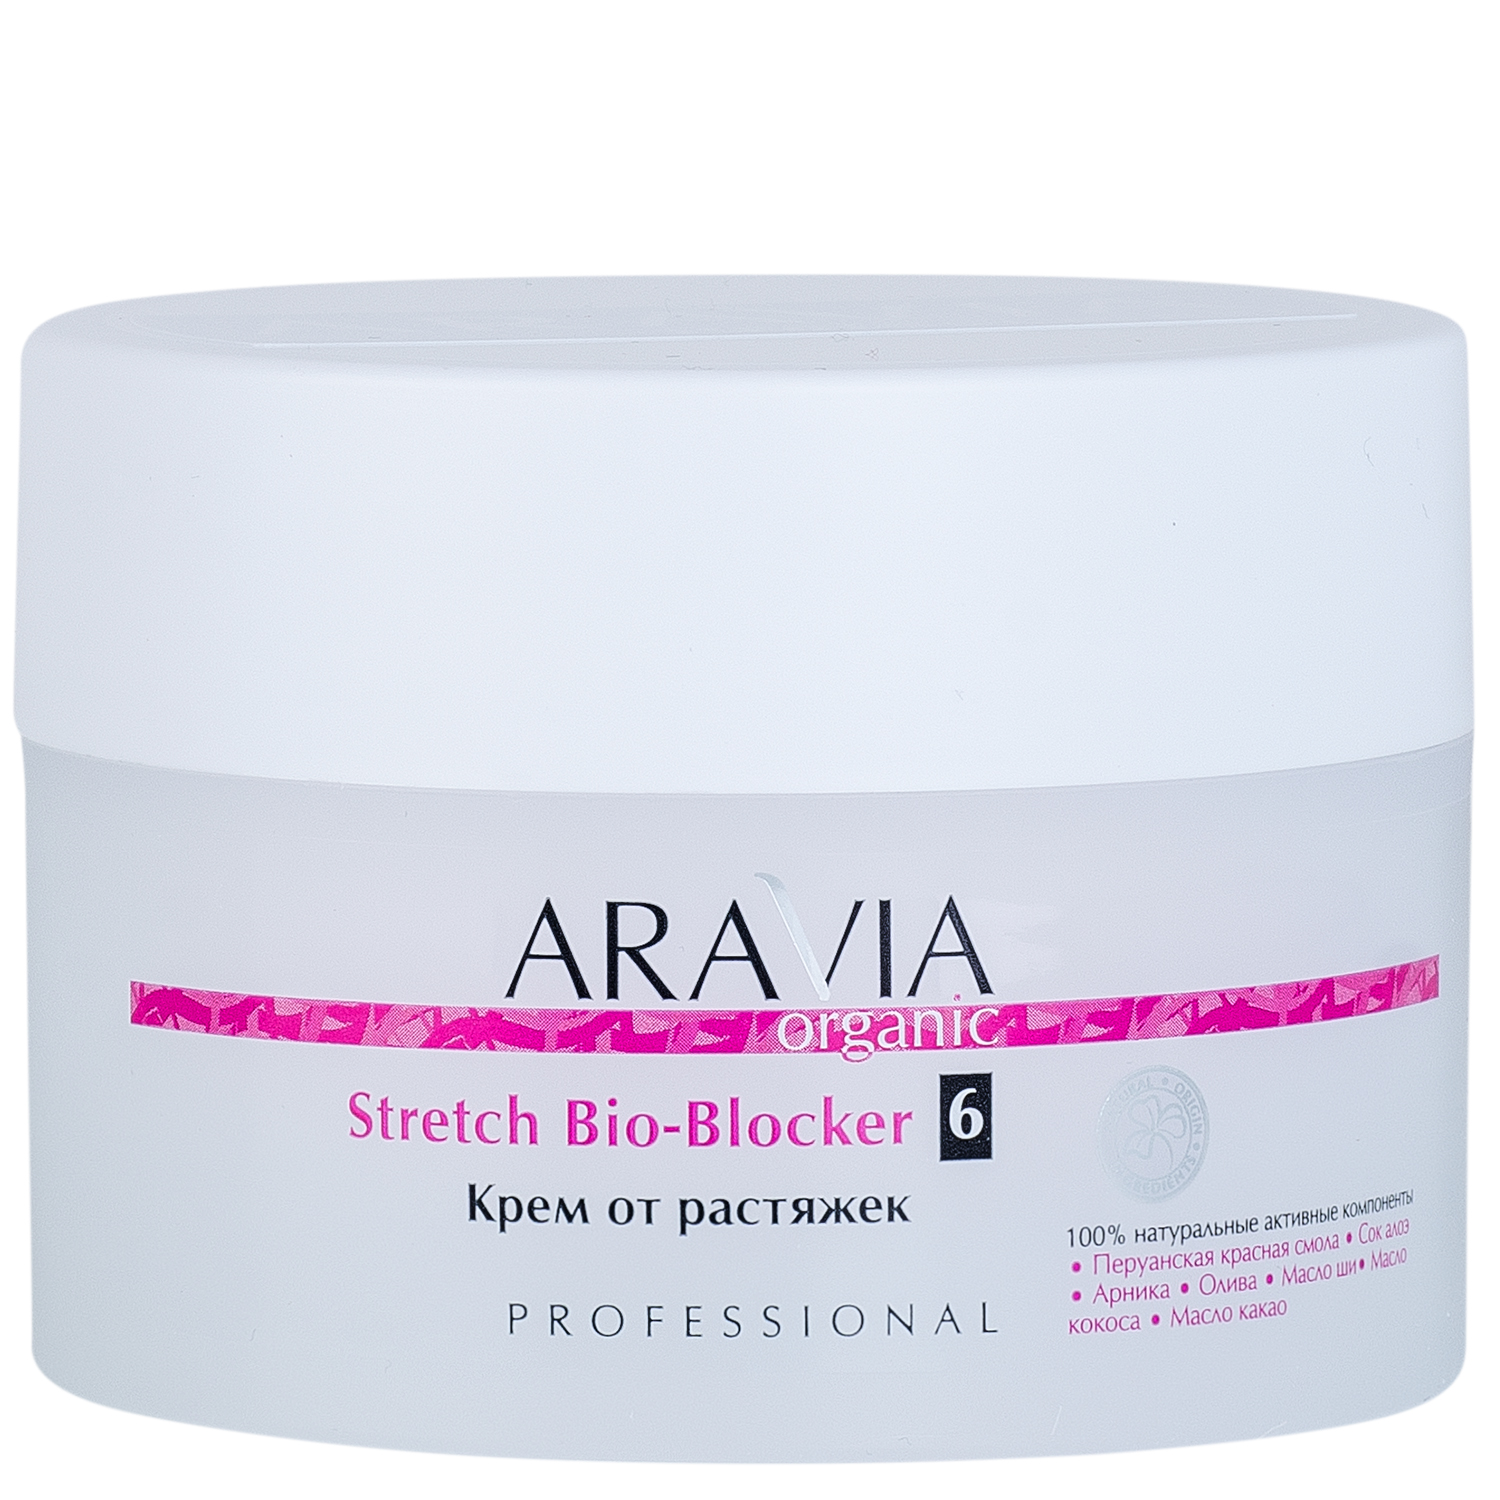 Крем от растяжек Aravia Professional 150 мл крем от растяжек aravia organic stretch bio blocker 150 мл